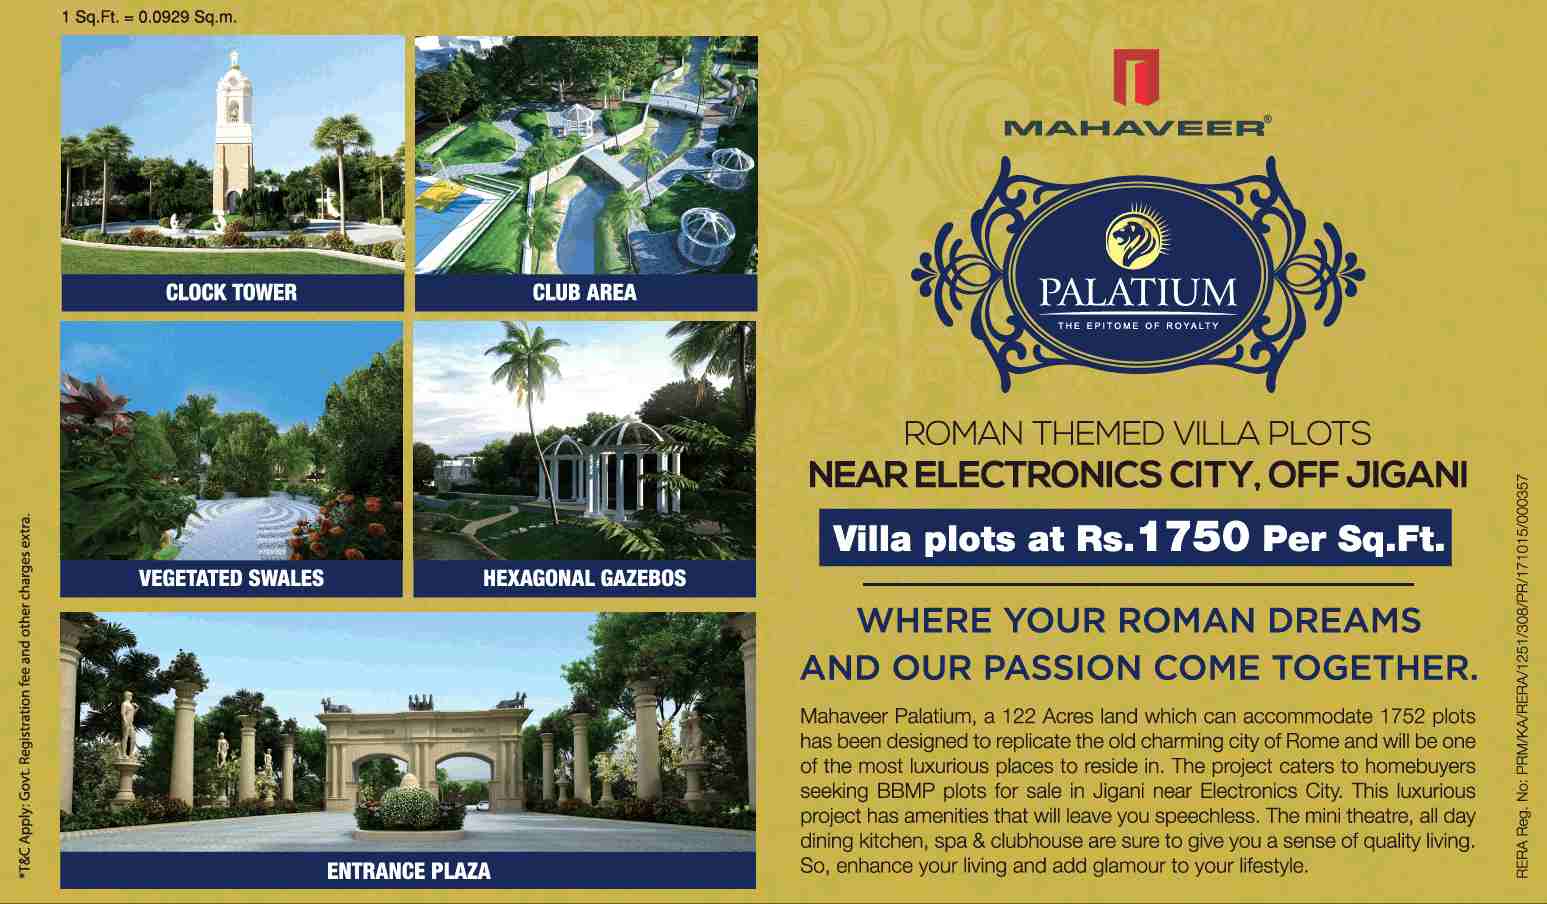 Book Roman Themed villa plots at Rs. 1750 per sqft. at Mahaveer Palatium in Bangalore Update